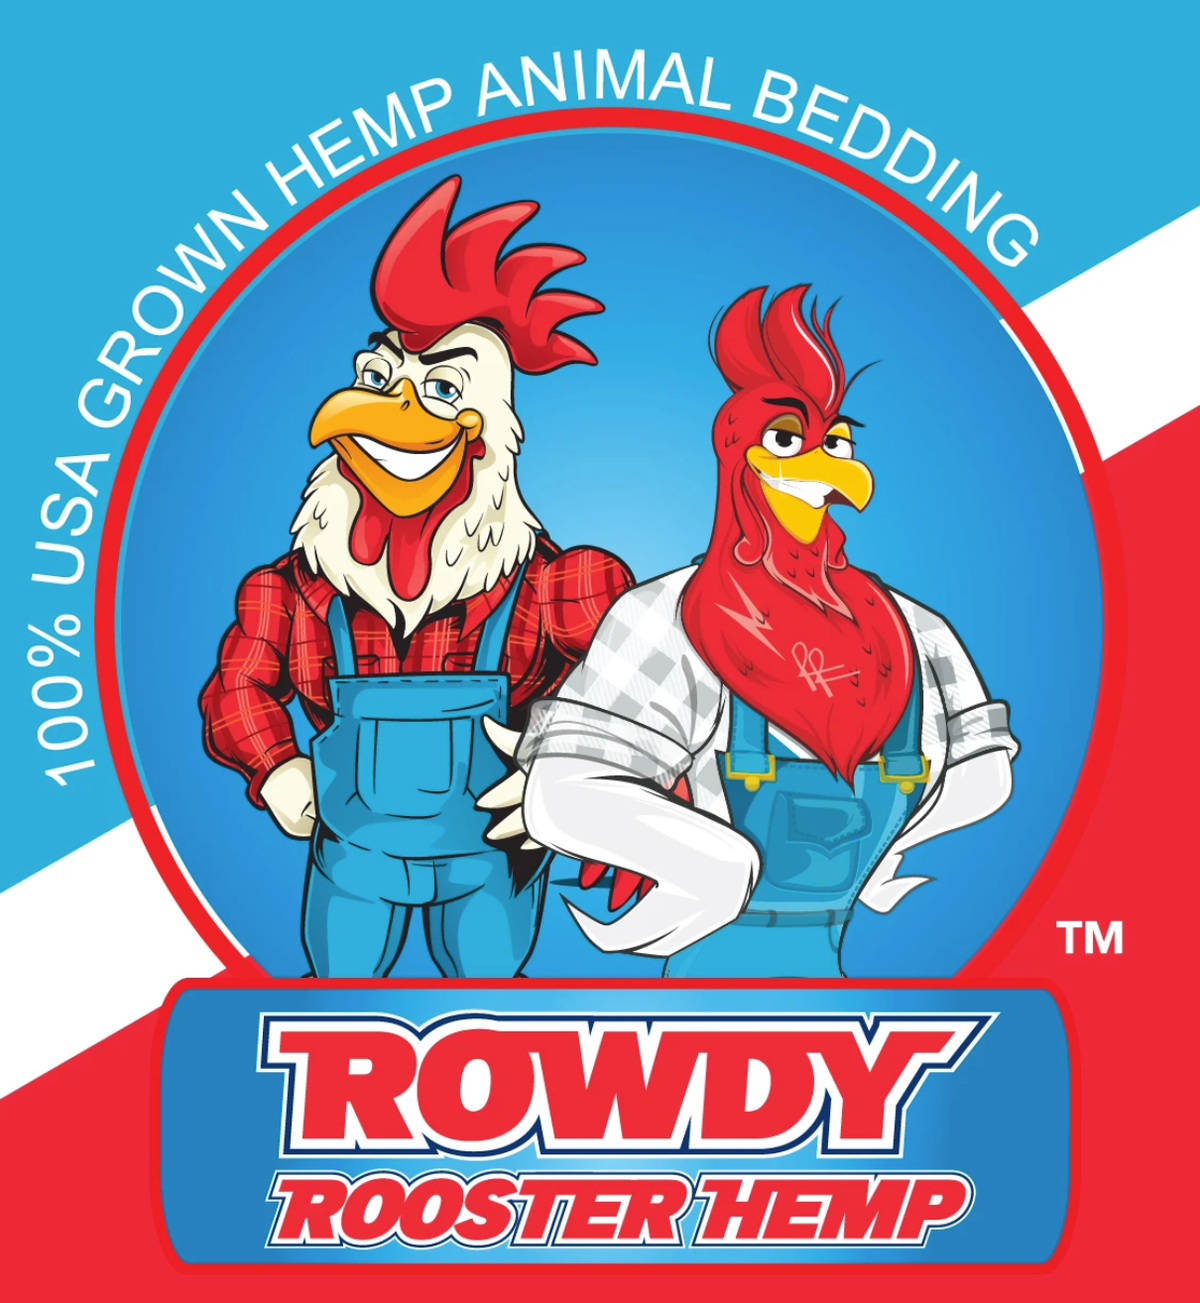 Rowdy Rooster hemp pet bedding